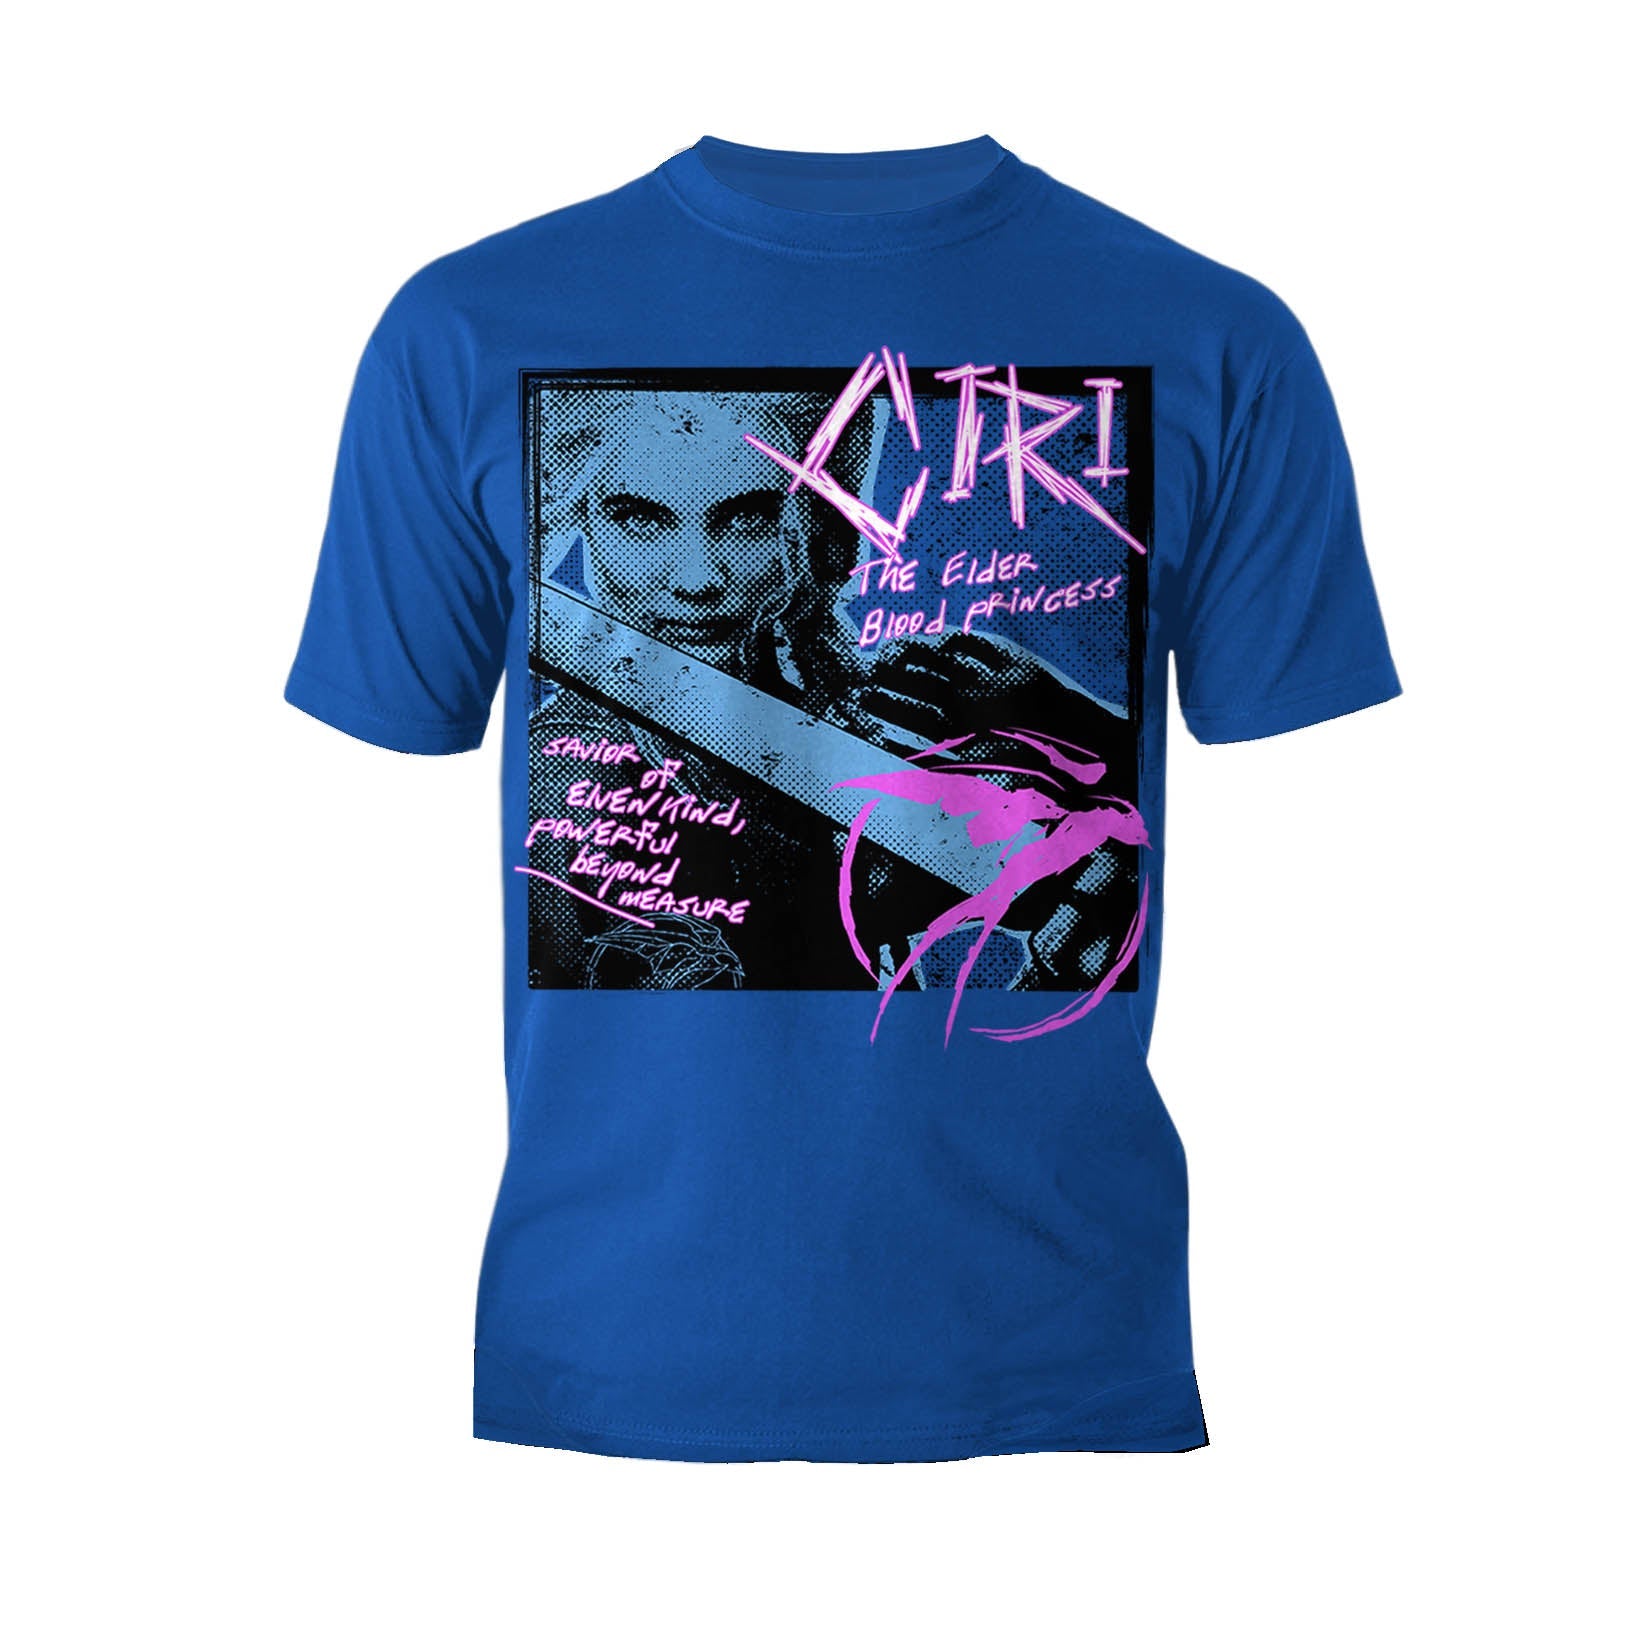 The Witcher Ciri Splash Princess Punk Official Men's T-Shirt